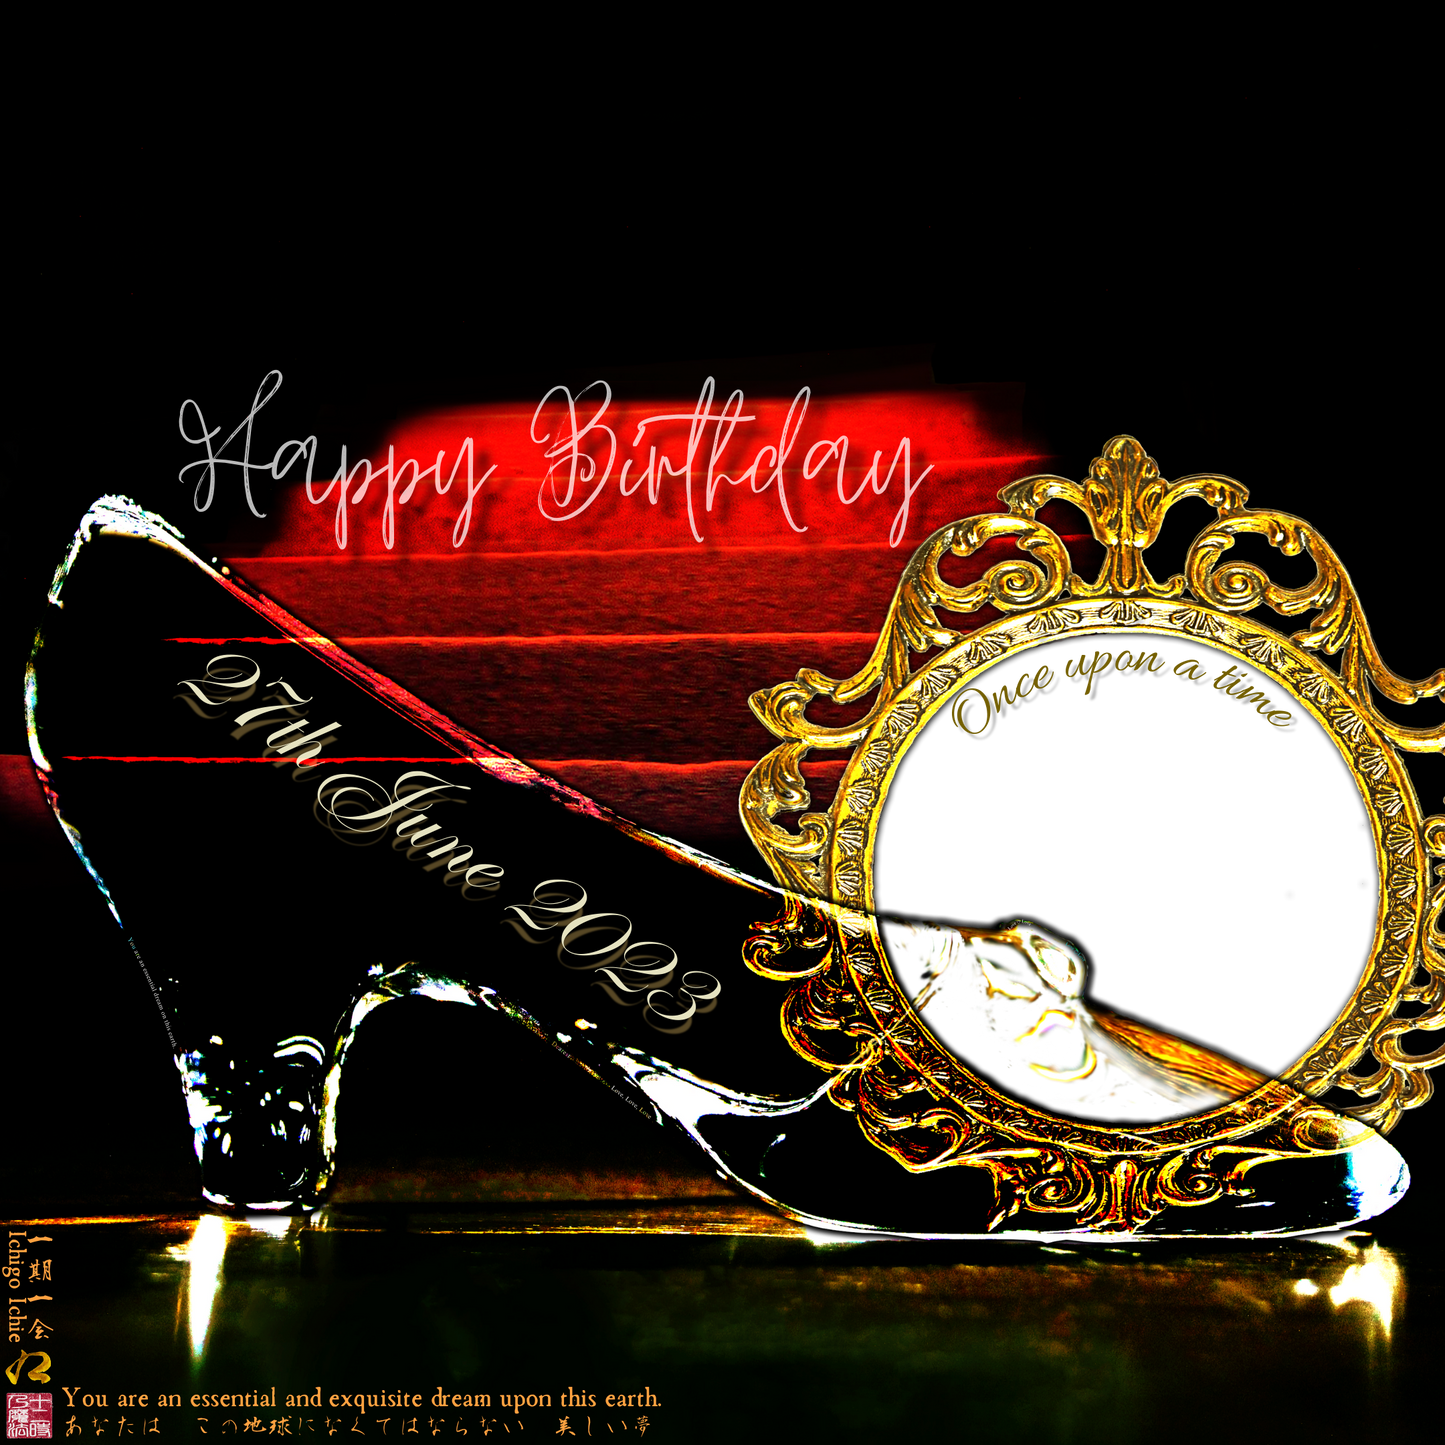 Happy Birthday Glass Slipper "Ichigo Ichie" 27th June 2023 the Right (1-of-1) NFT Art